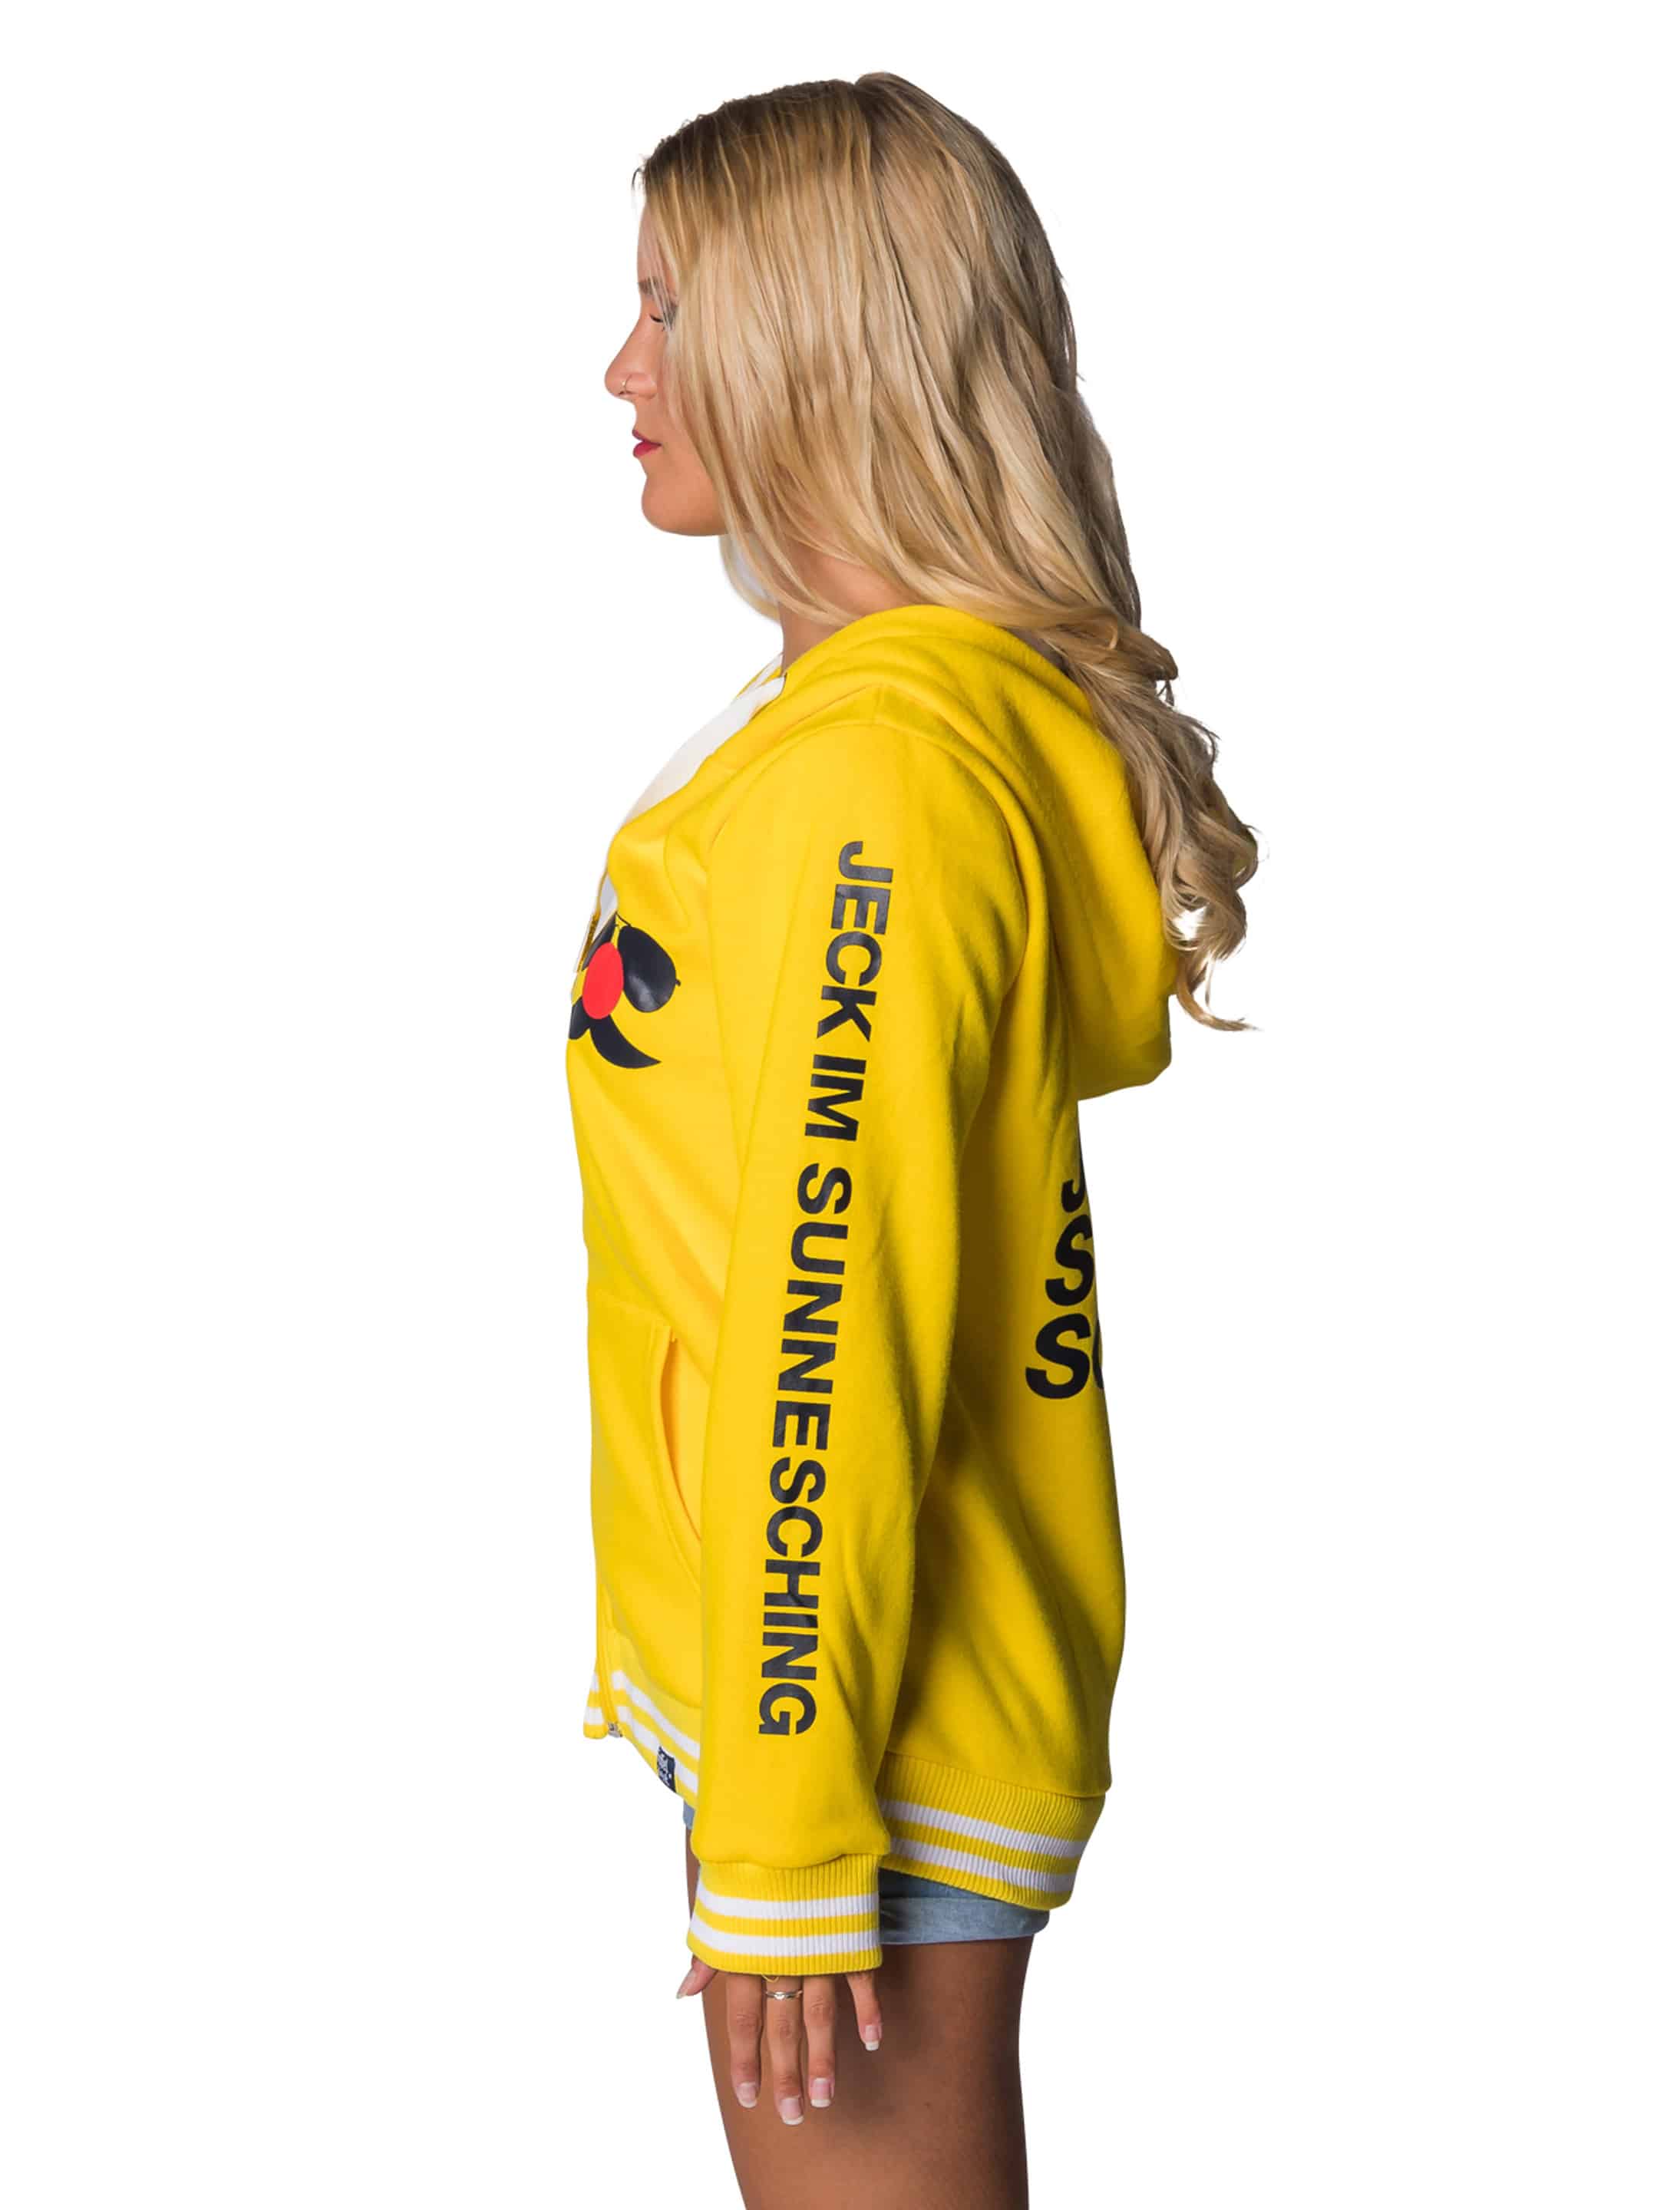 Sweatshirt Jacke Jeck im Sunnesching Unisex gelb XS/S